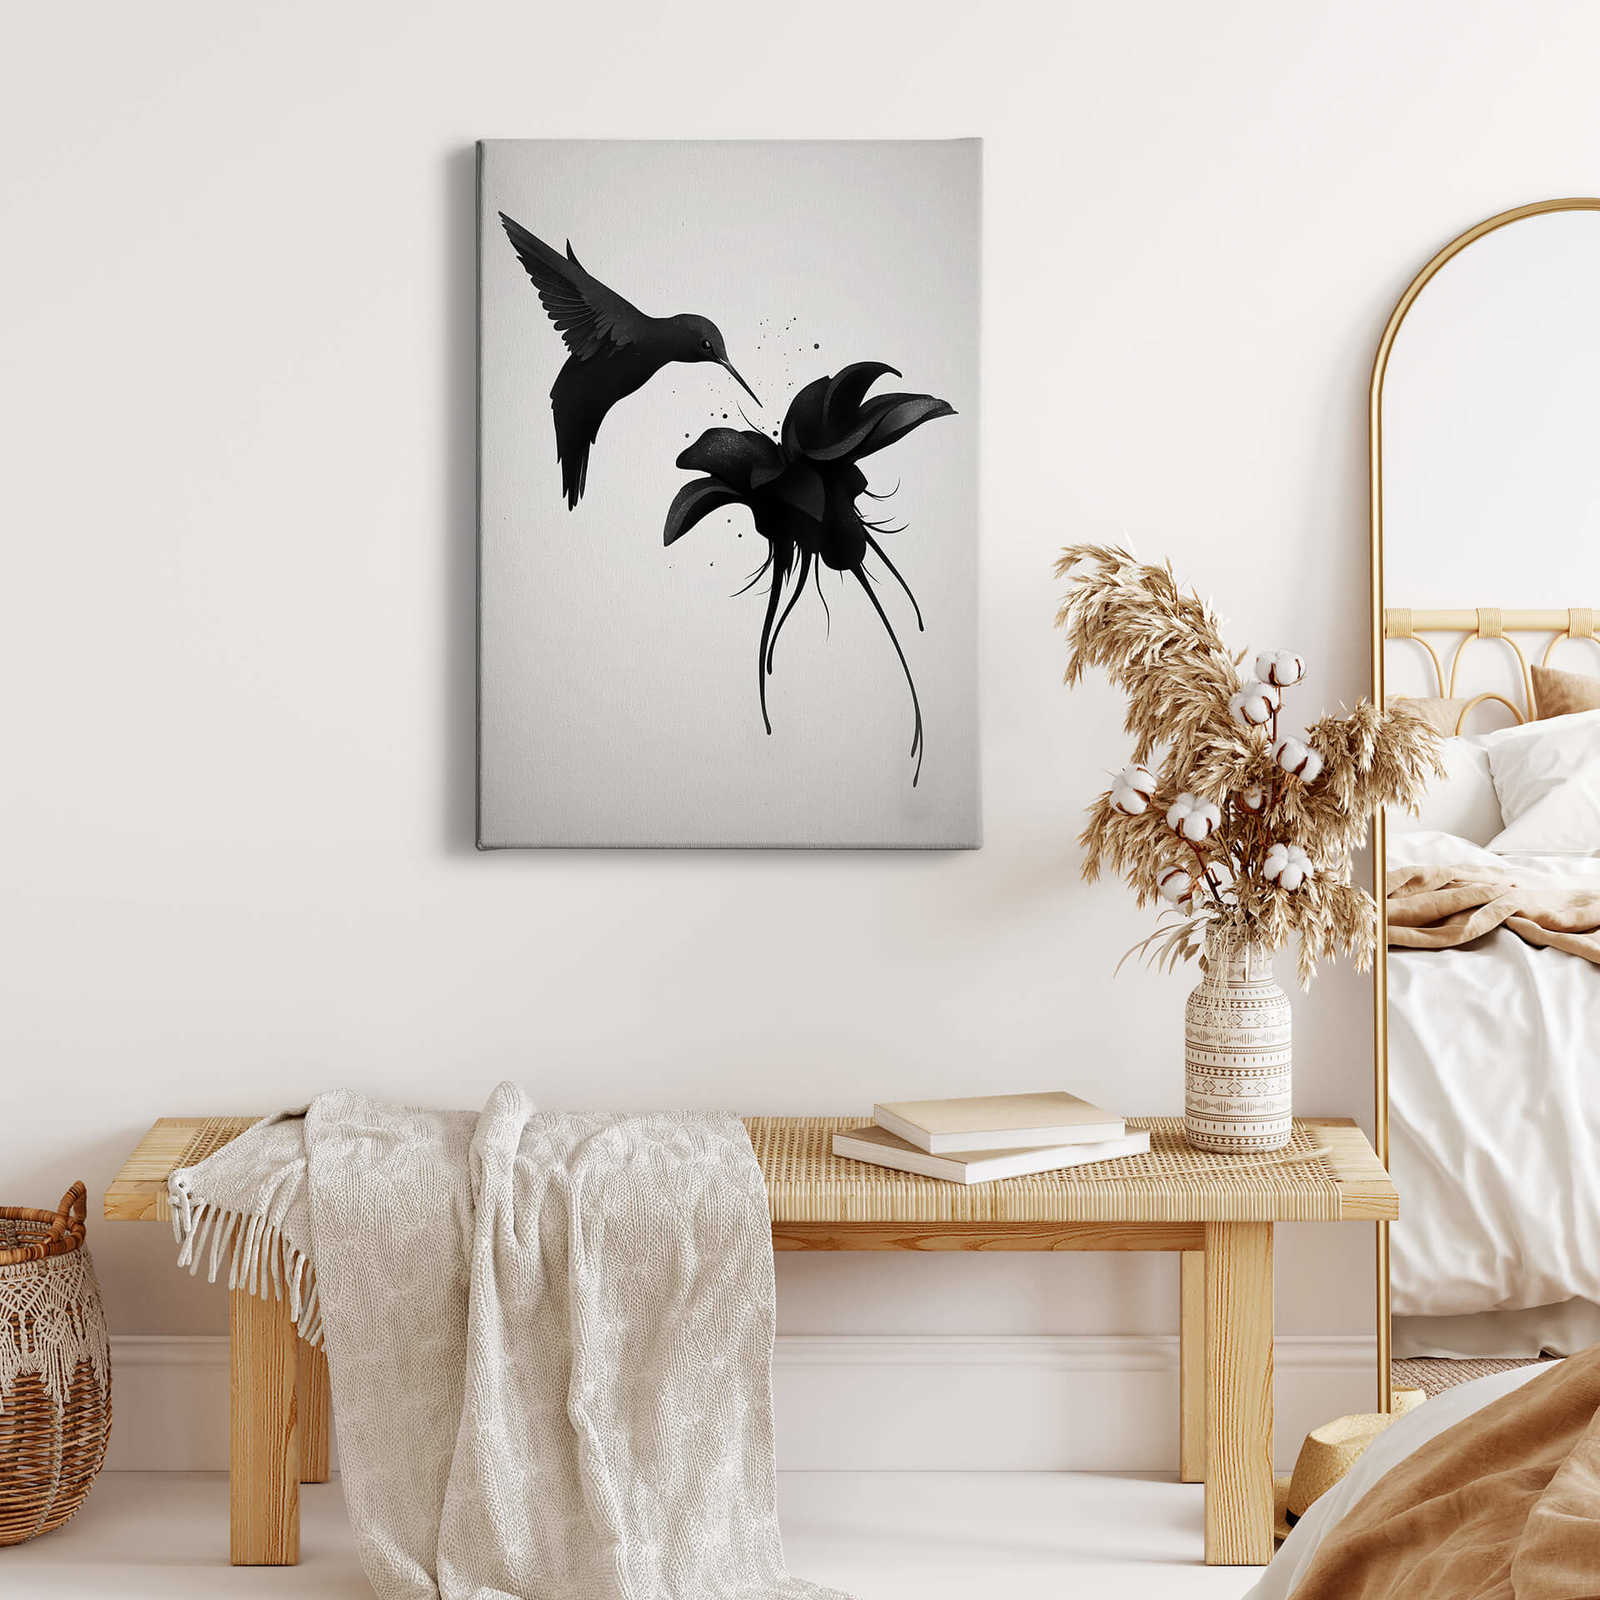             Canvas print hummingbird and flower – black, white
        